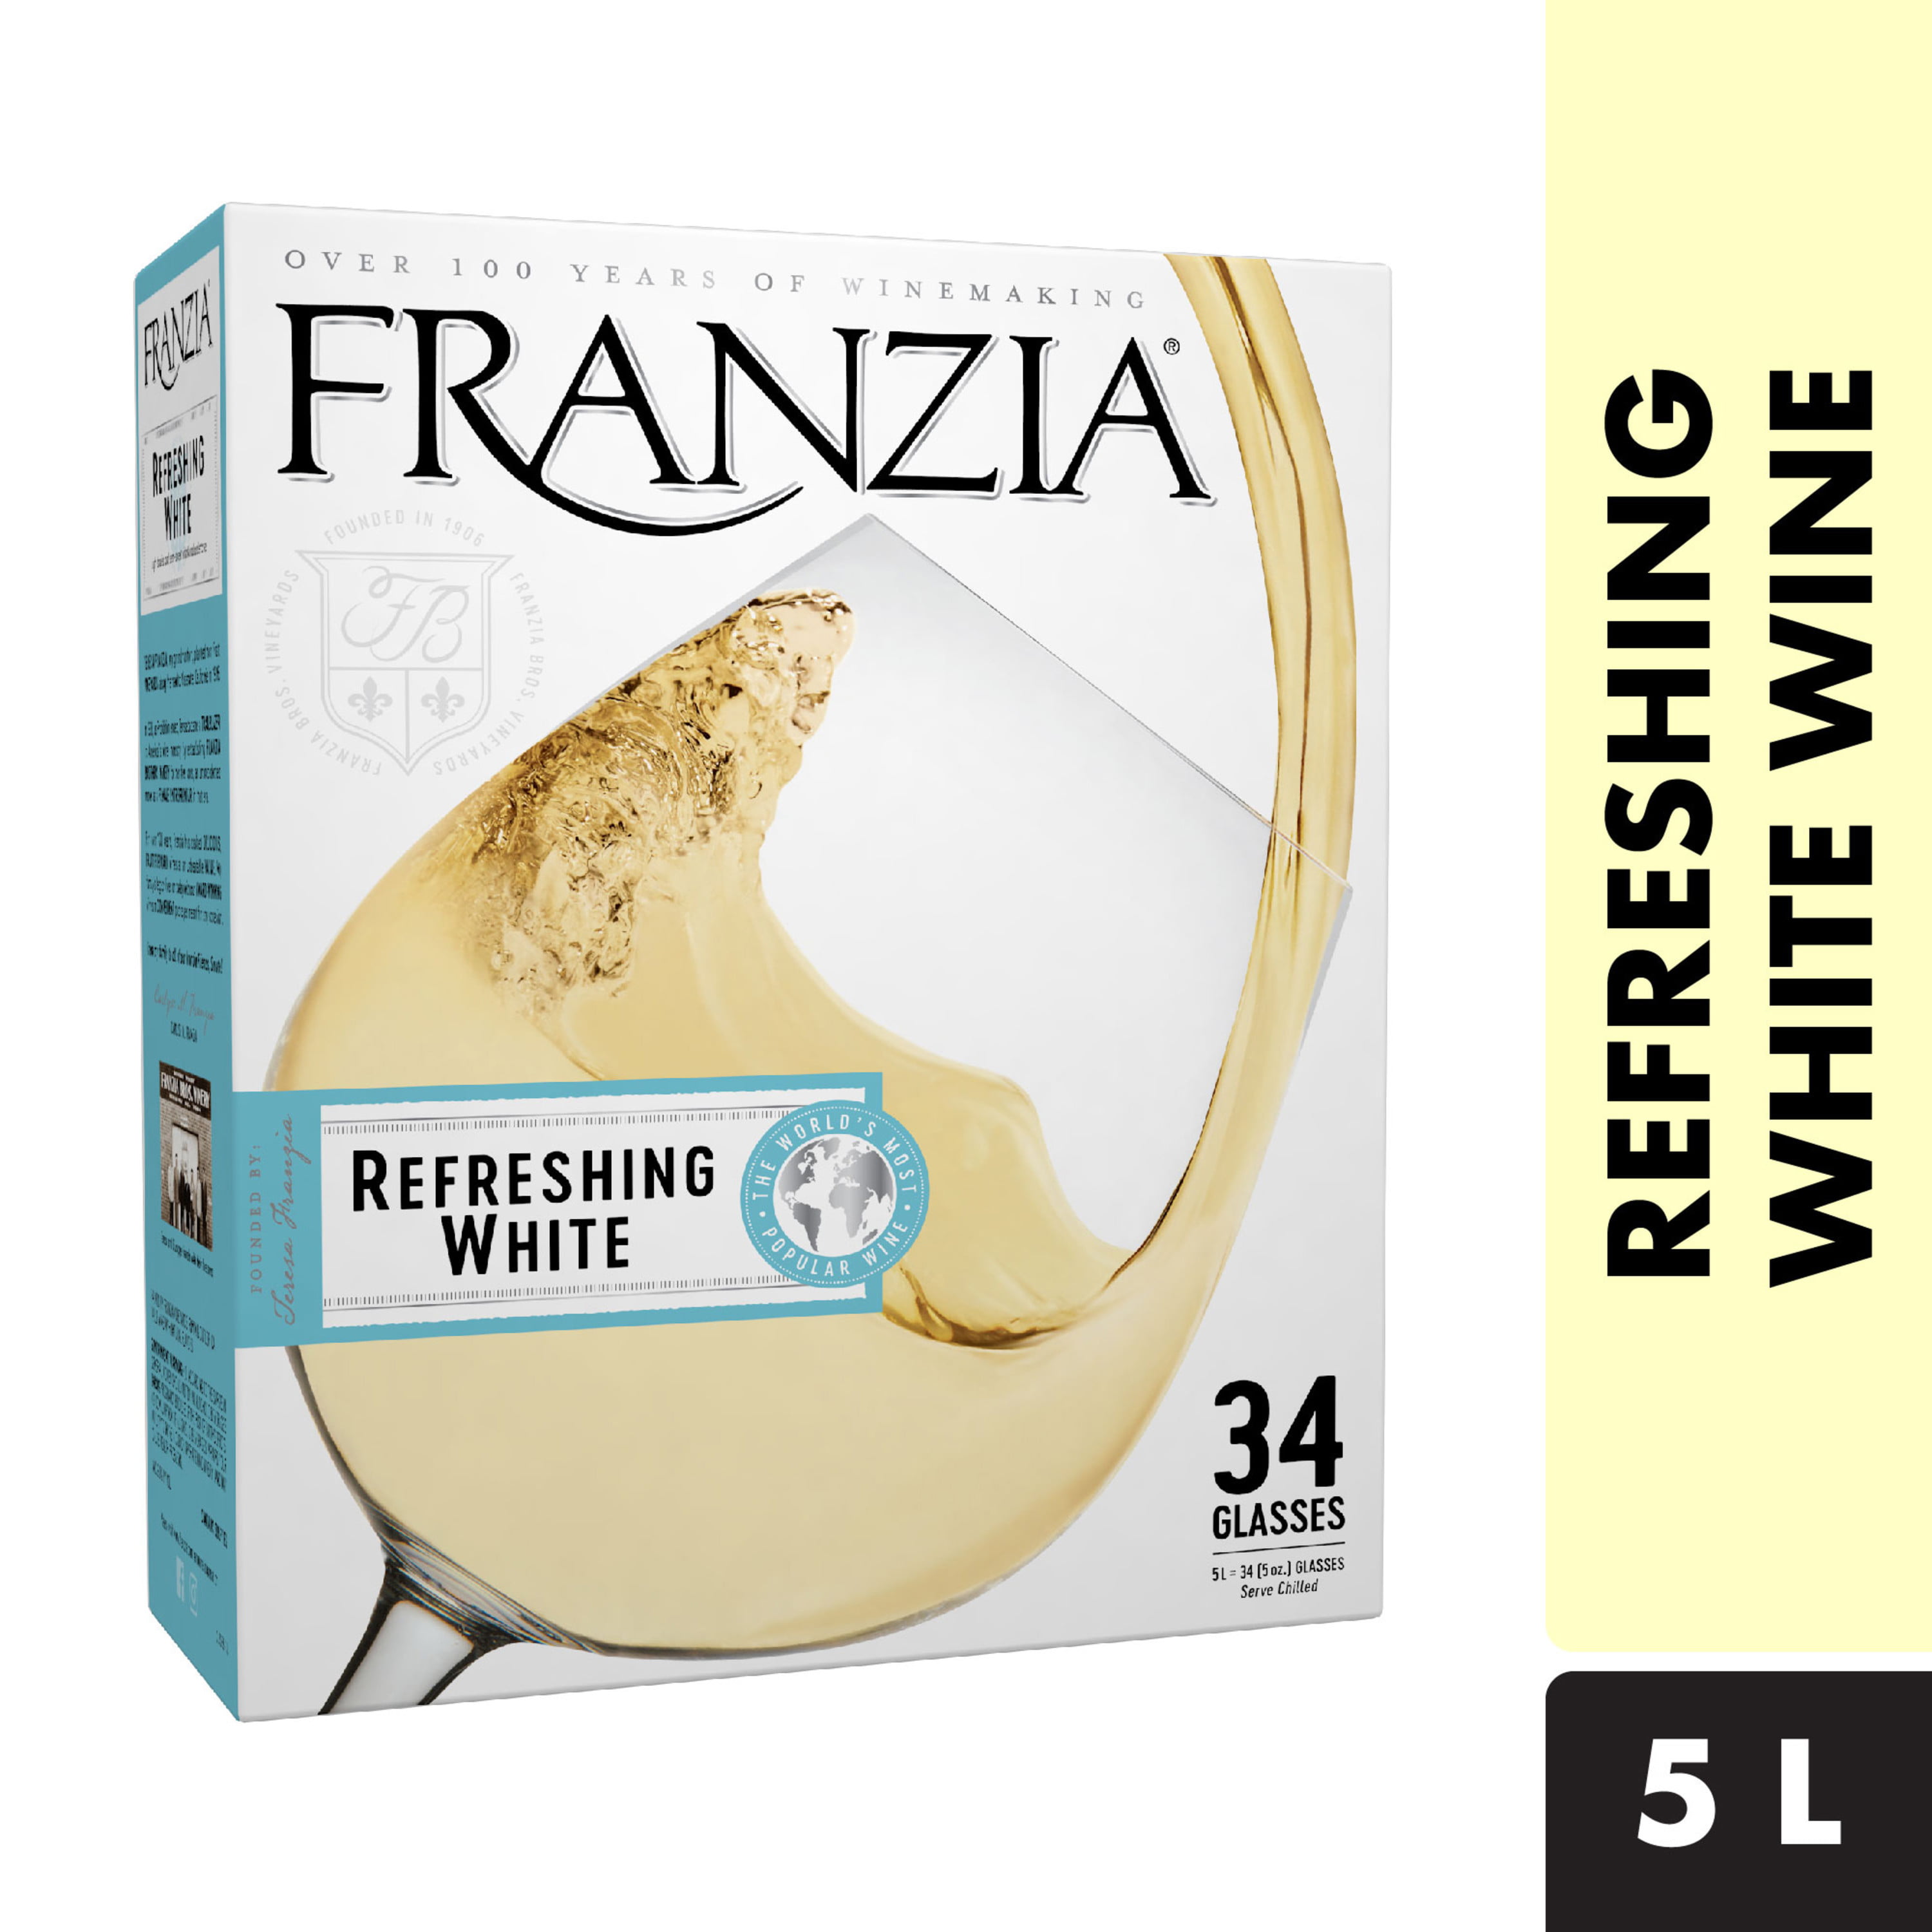 franzia-refreshing-white-white-wine-5-liter-walmart-walmart